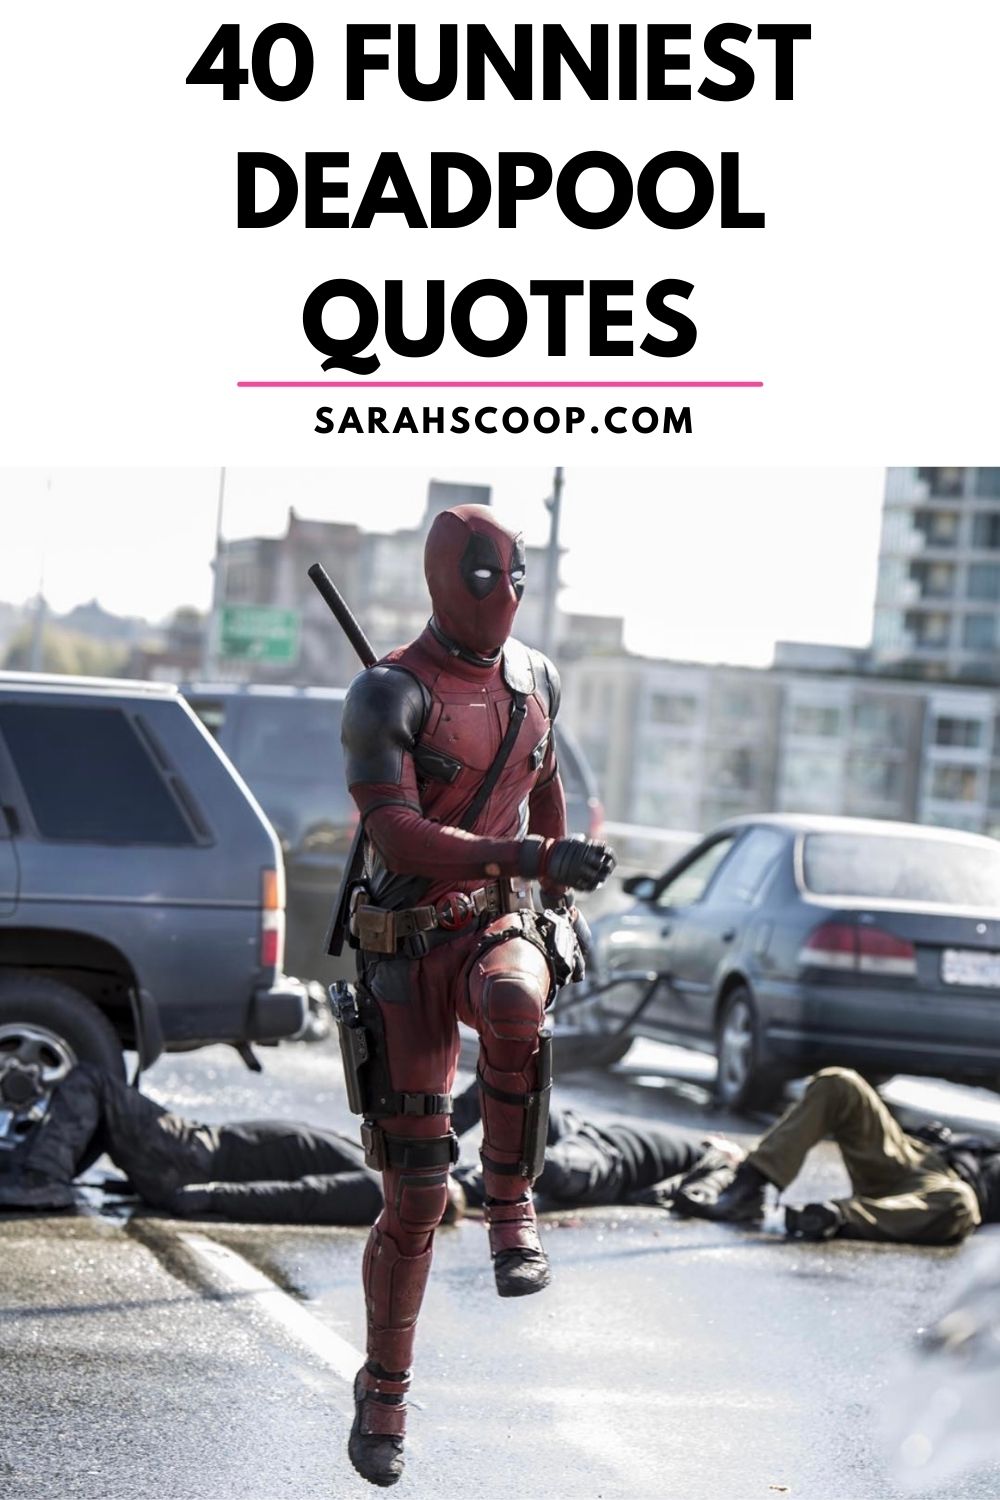 40 Funniest Deadpool Quotes - Sarah Scoop